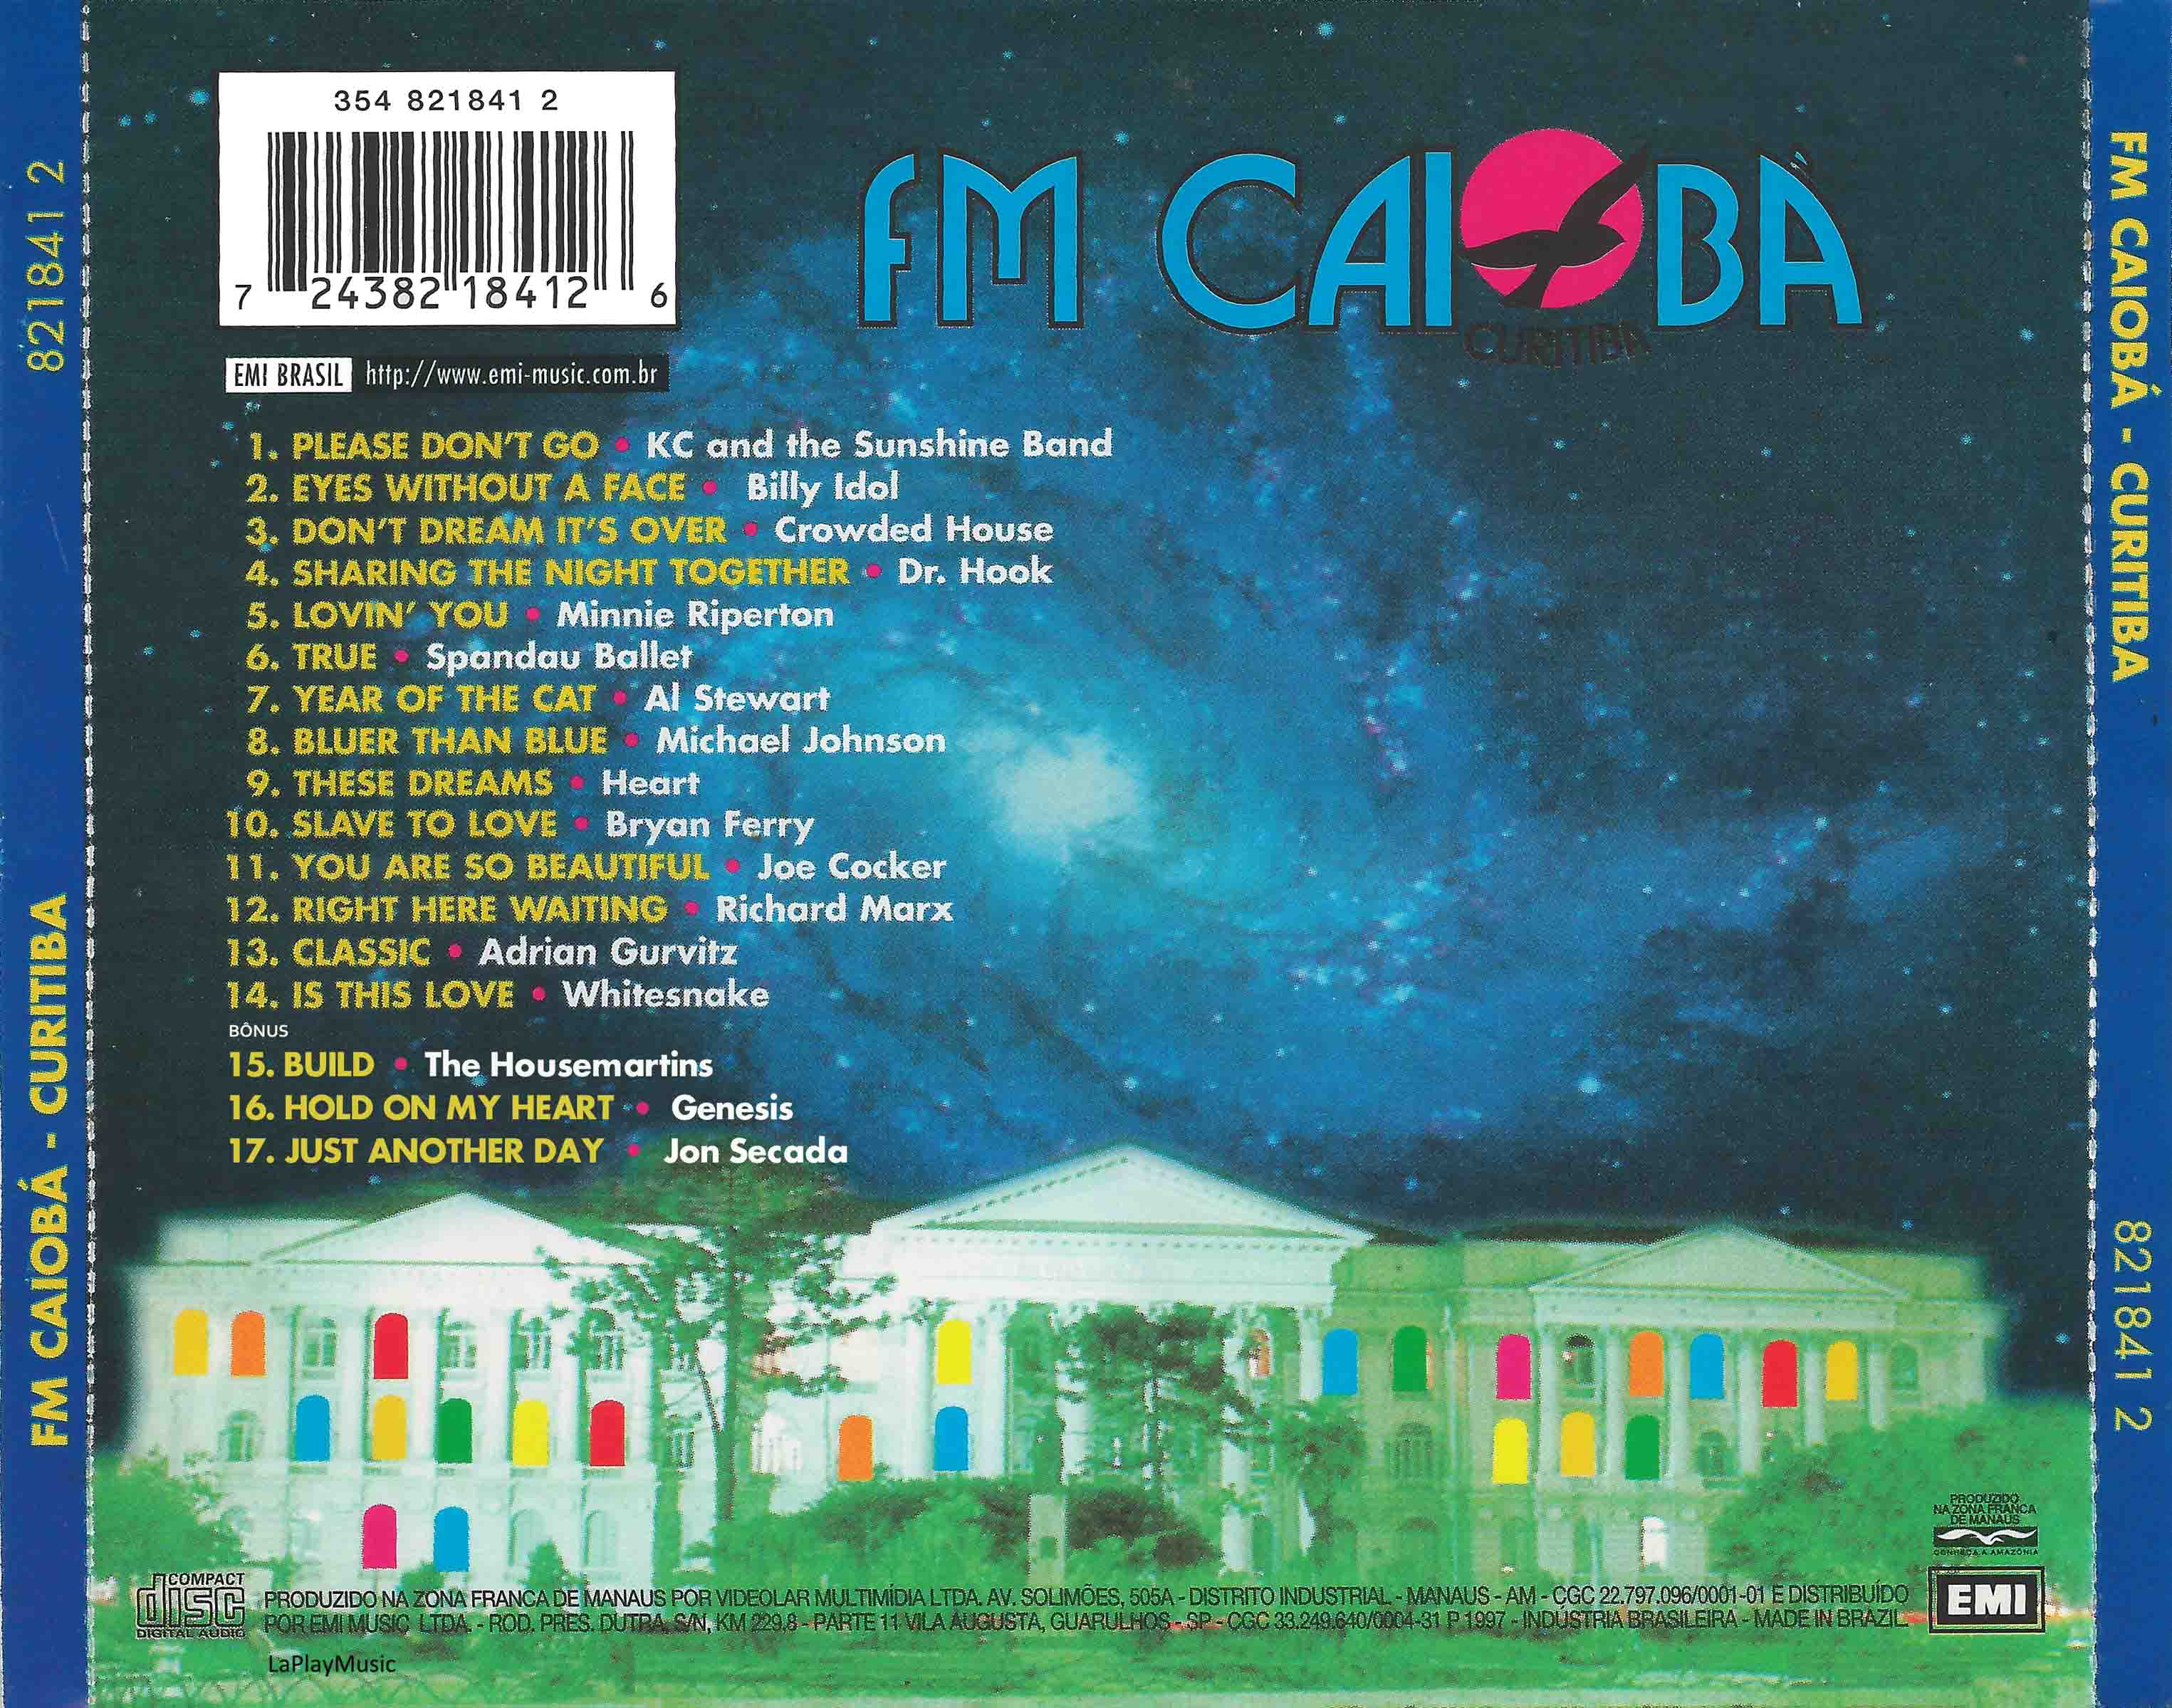 Rádio Caiobá FM 102.3 Curitiba / PR - Brasil 